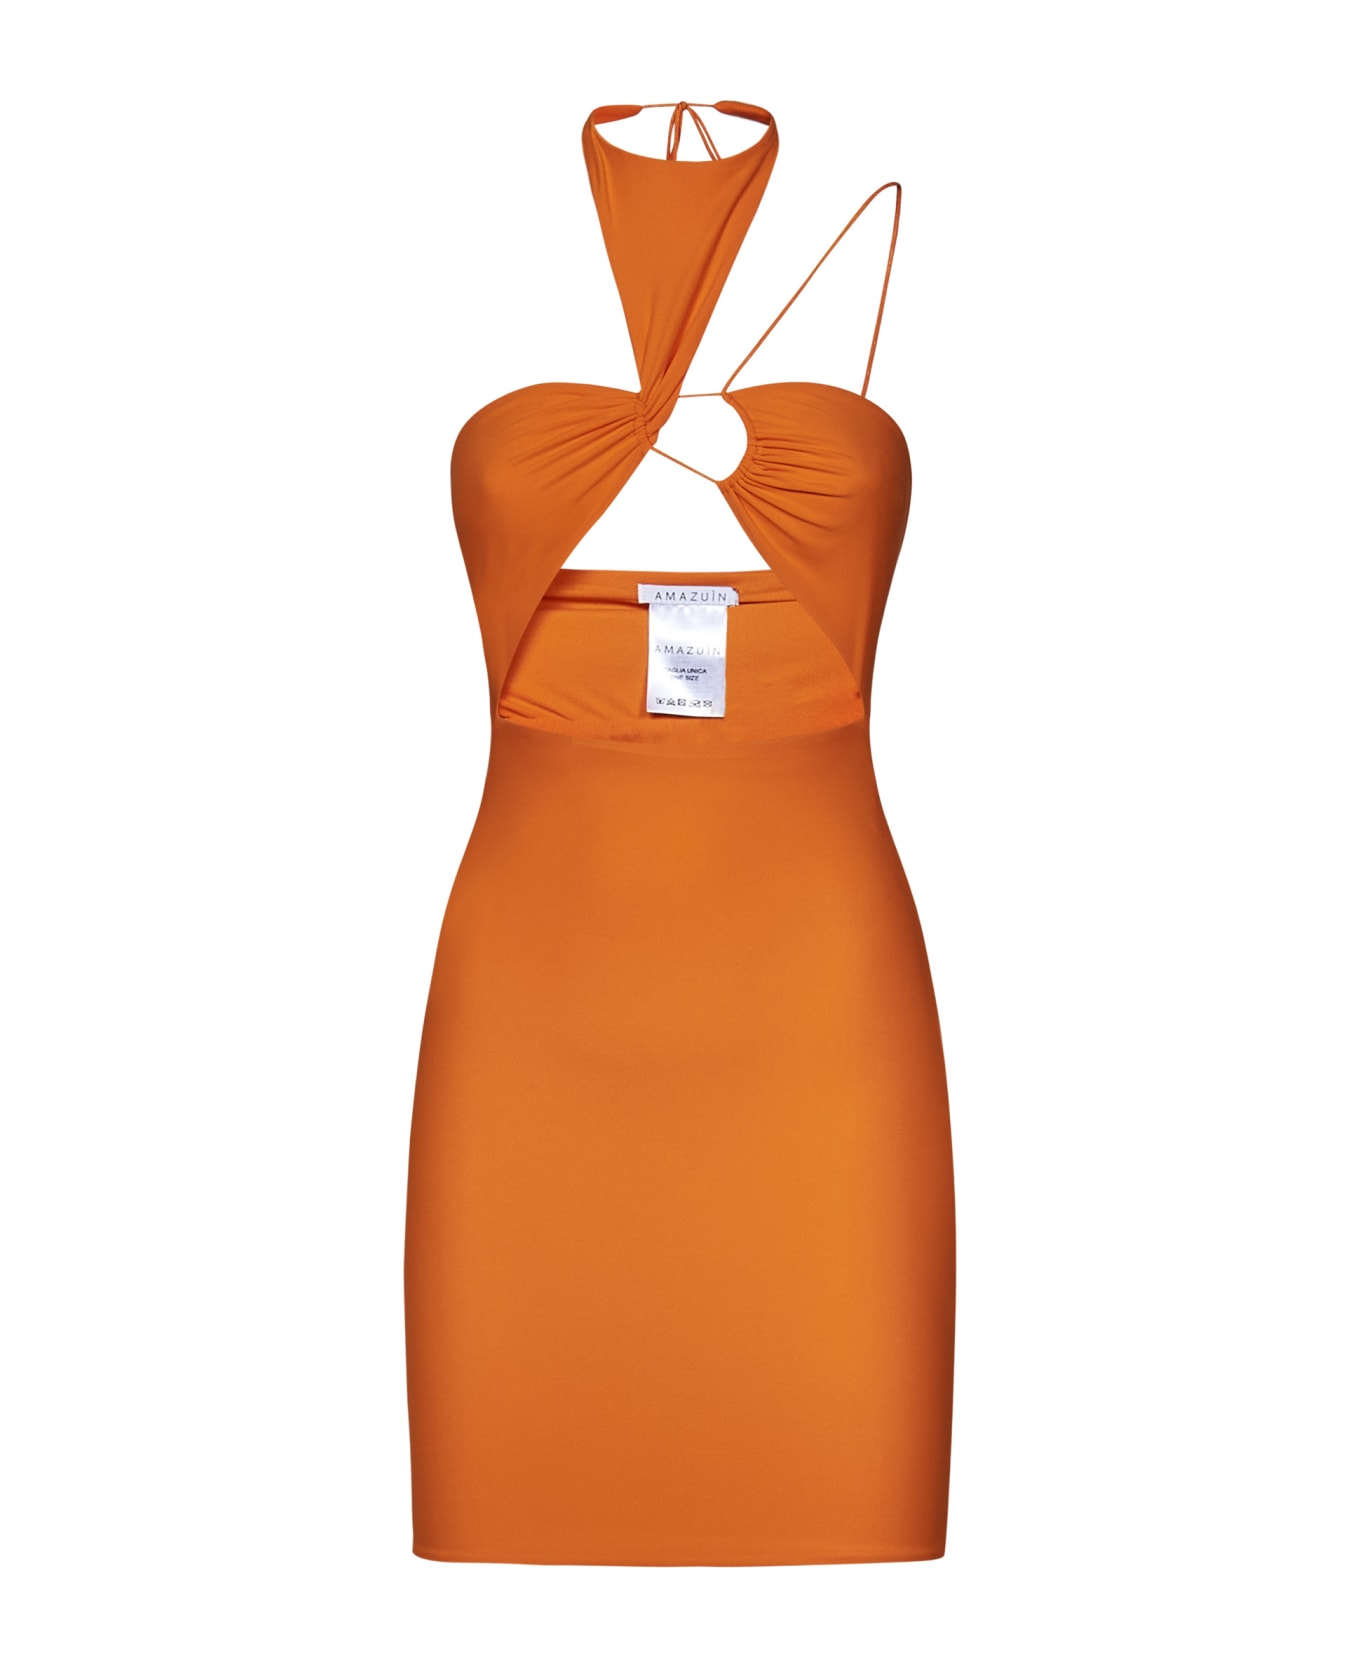 Amazuìn Kaya Mini Dress - Orange ワンピース＆ドレス